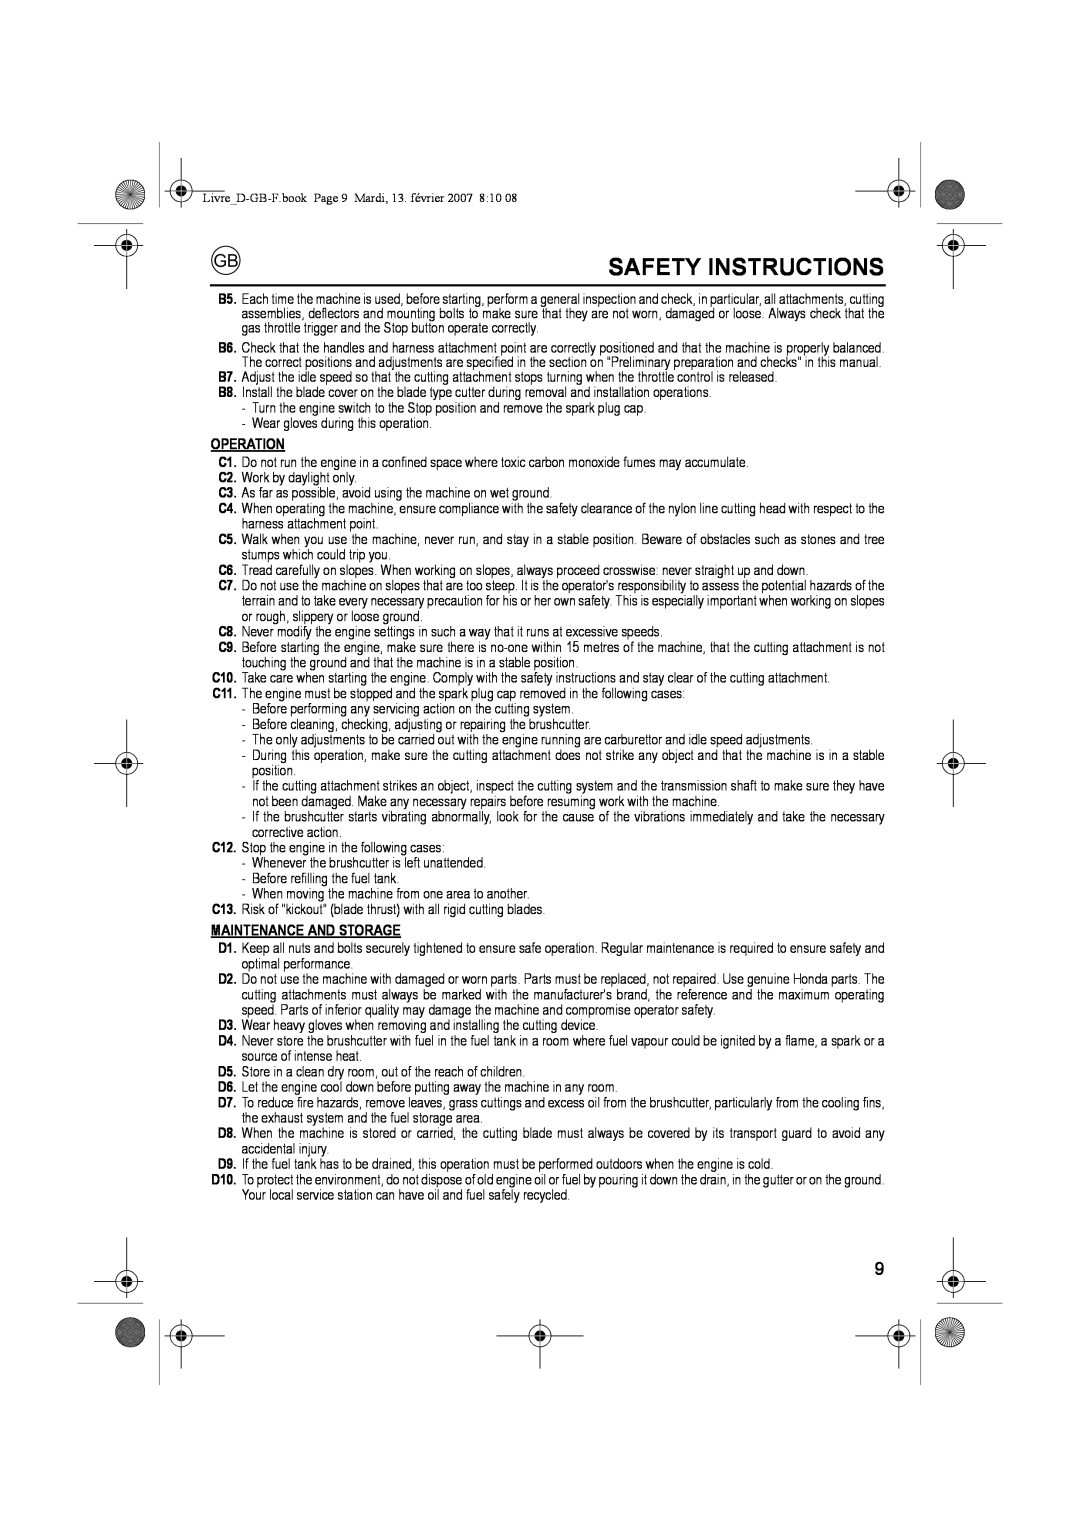 Honda Power Equipment UMK435E owner manual Safety Instructions, Operation, Maintenance And Storage 